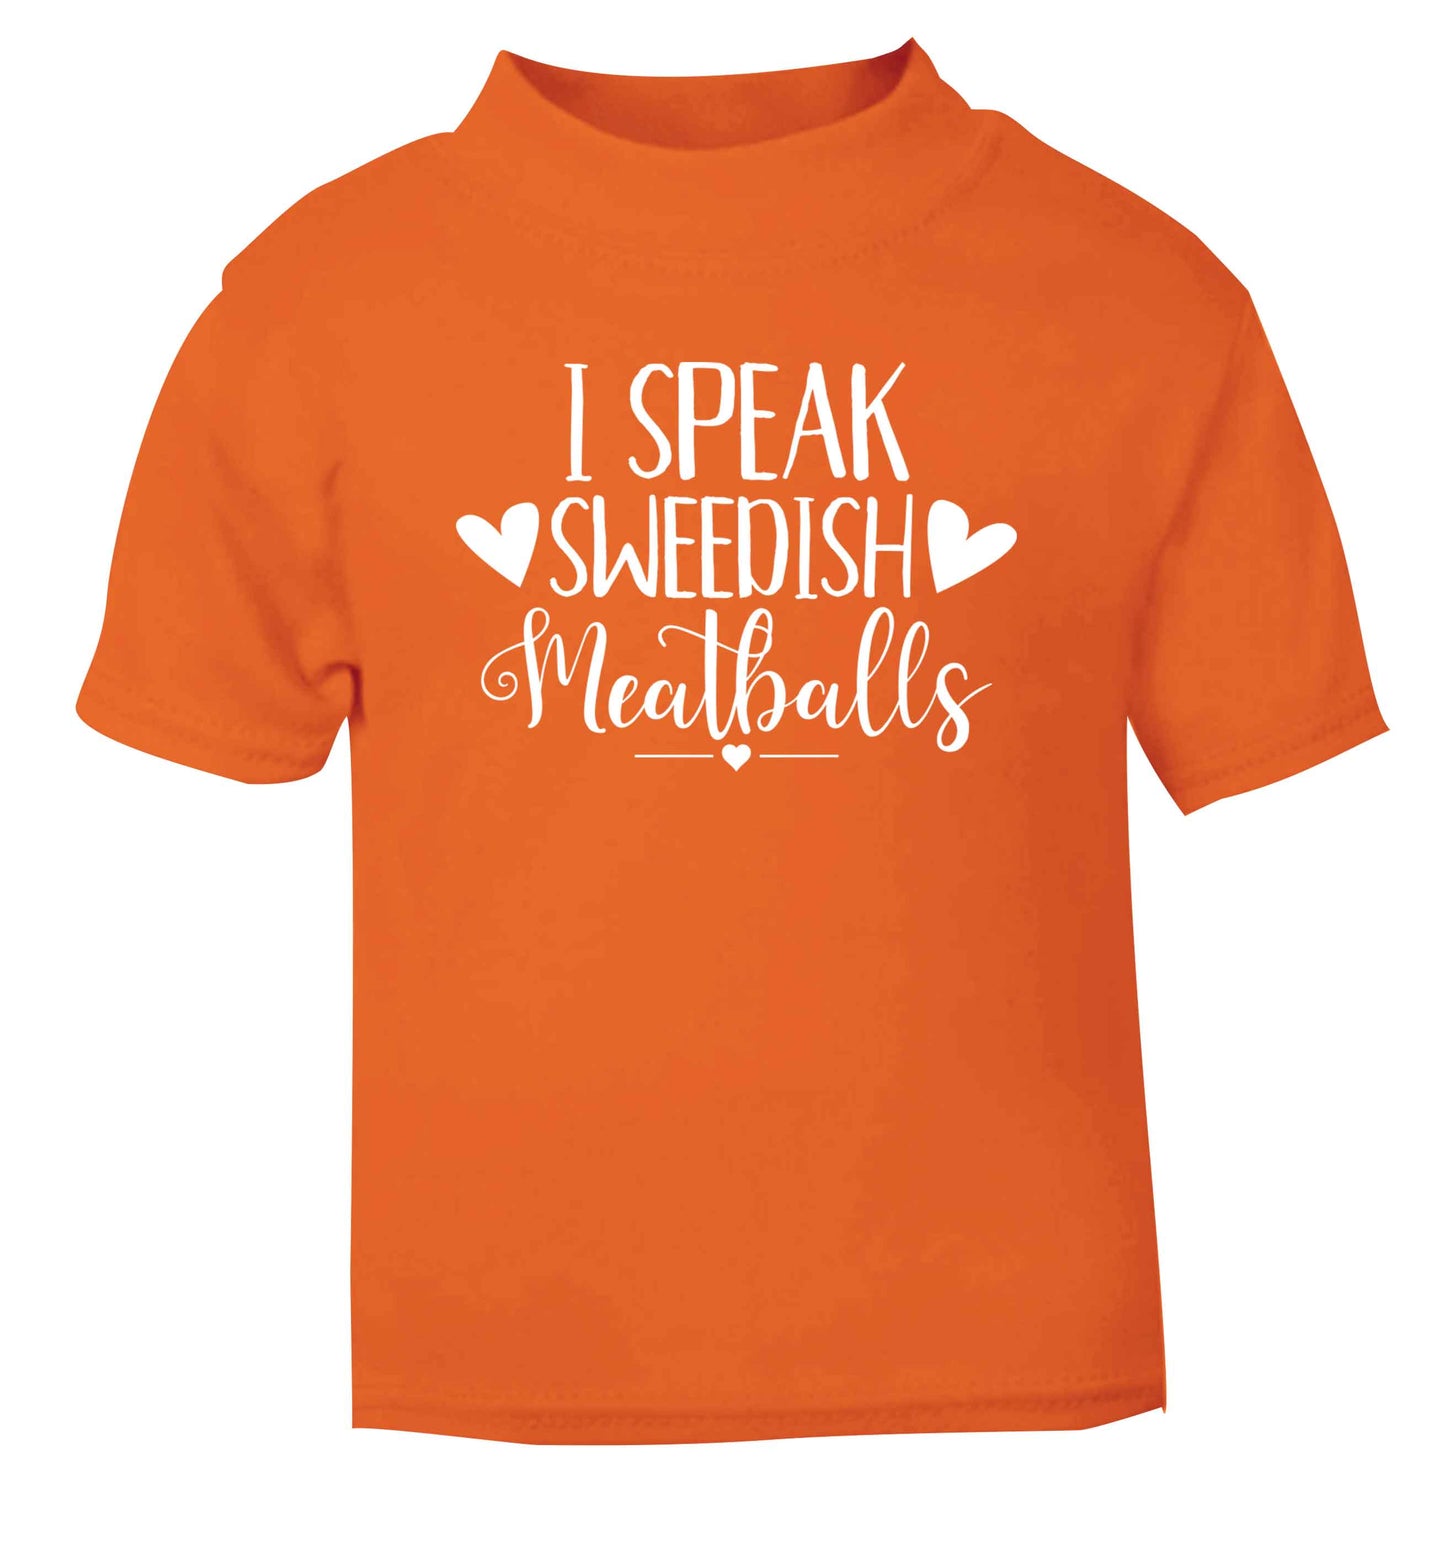 I speak sweedish...meatballs orange Baby Toddler Tshirt 2 Years